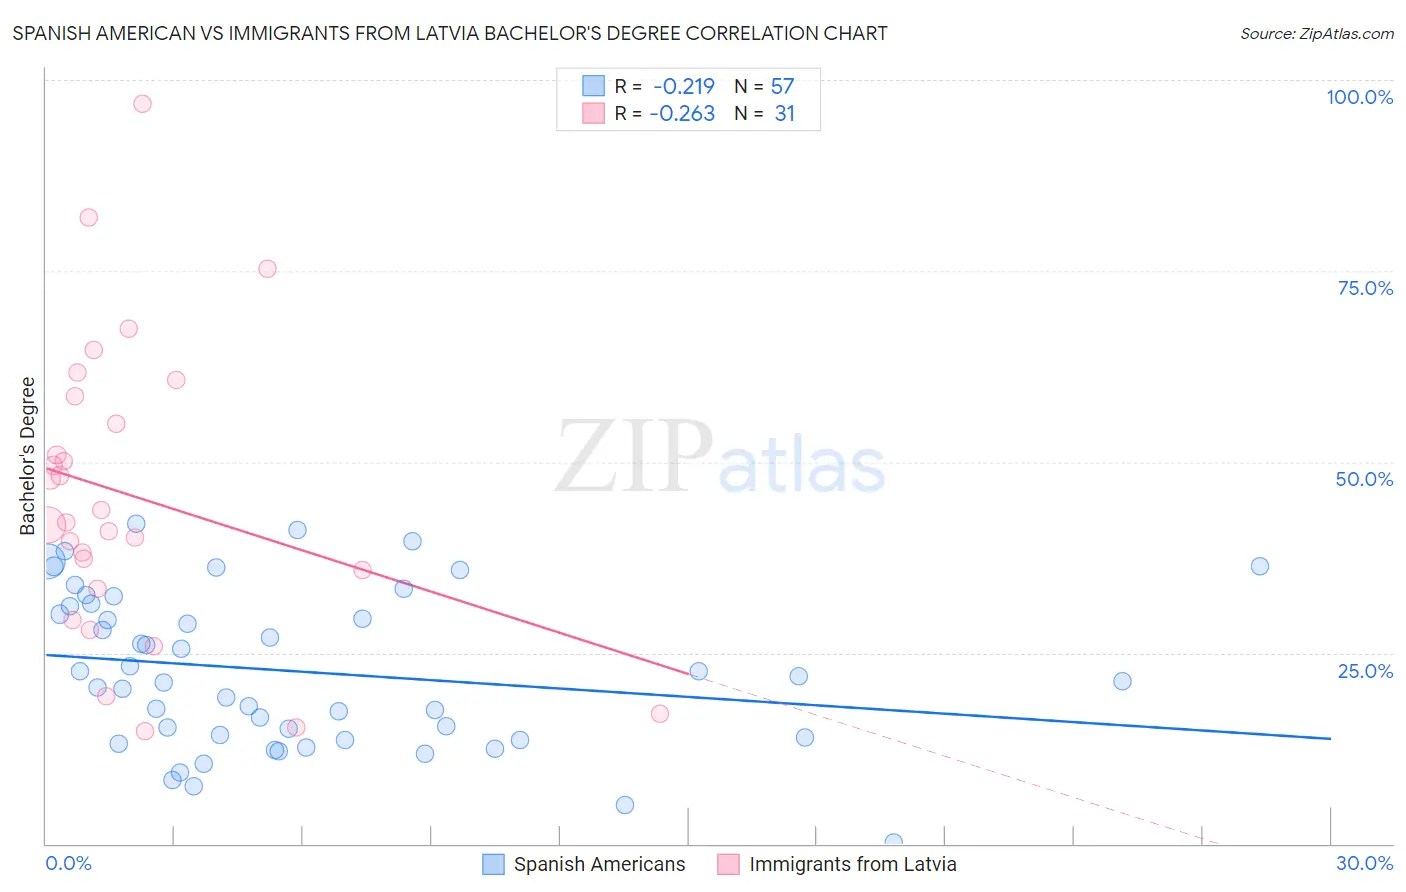 Spanish American vs Immigrants from Latvia Bachelor's Degree